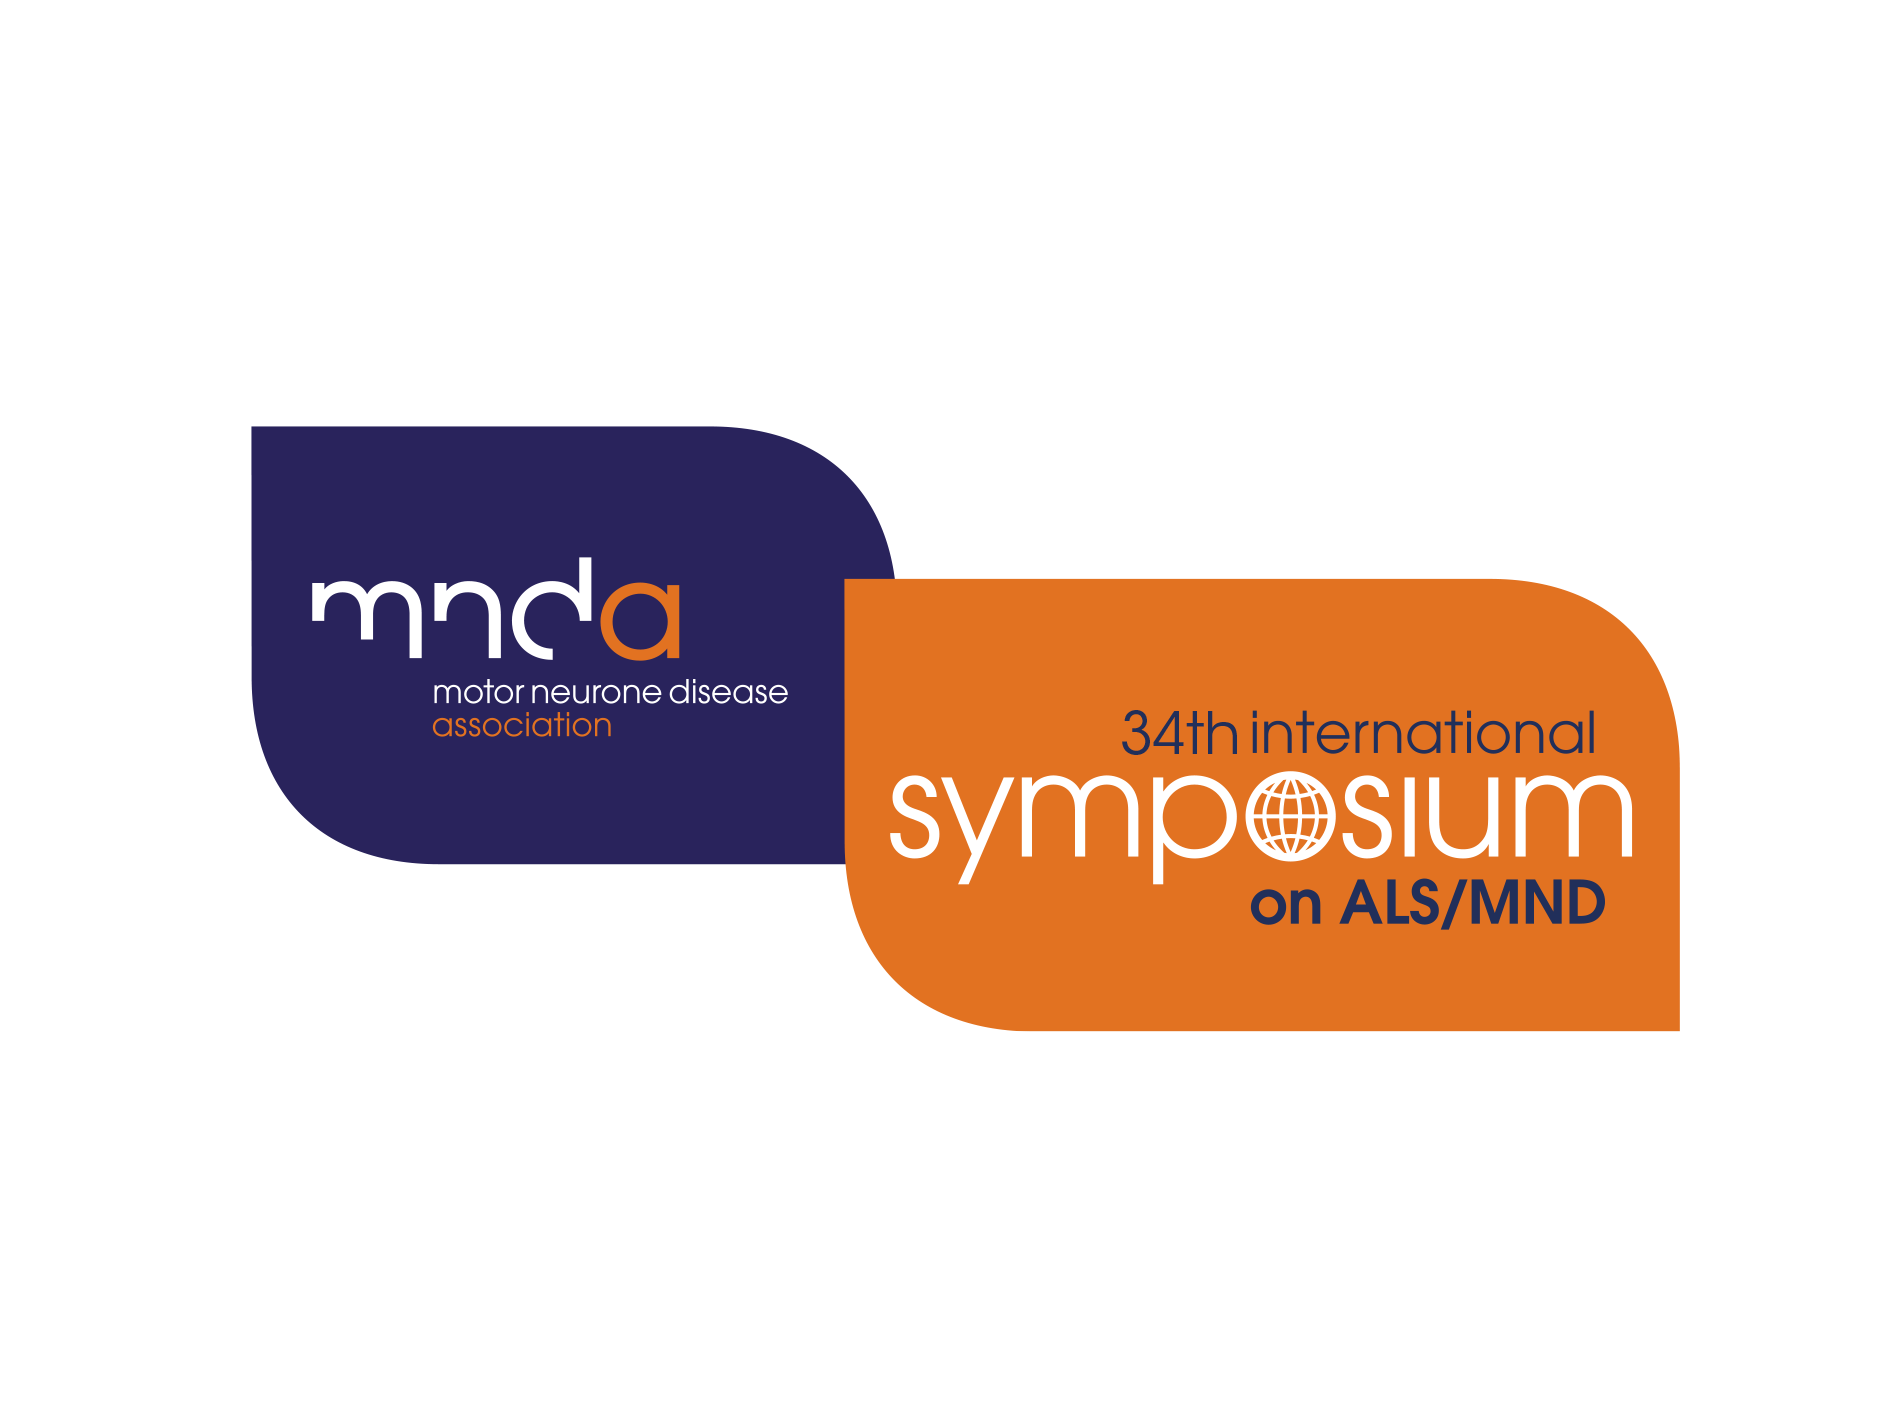 34th International Symposium on ALS/MND